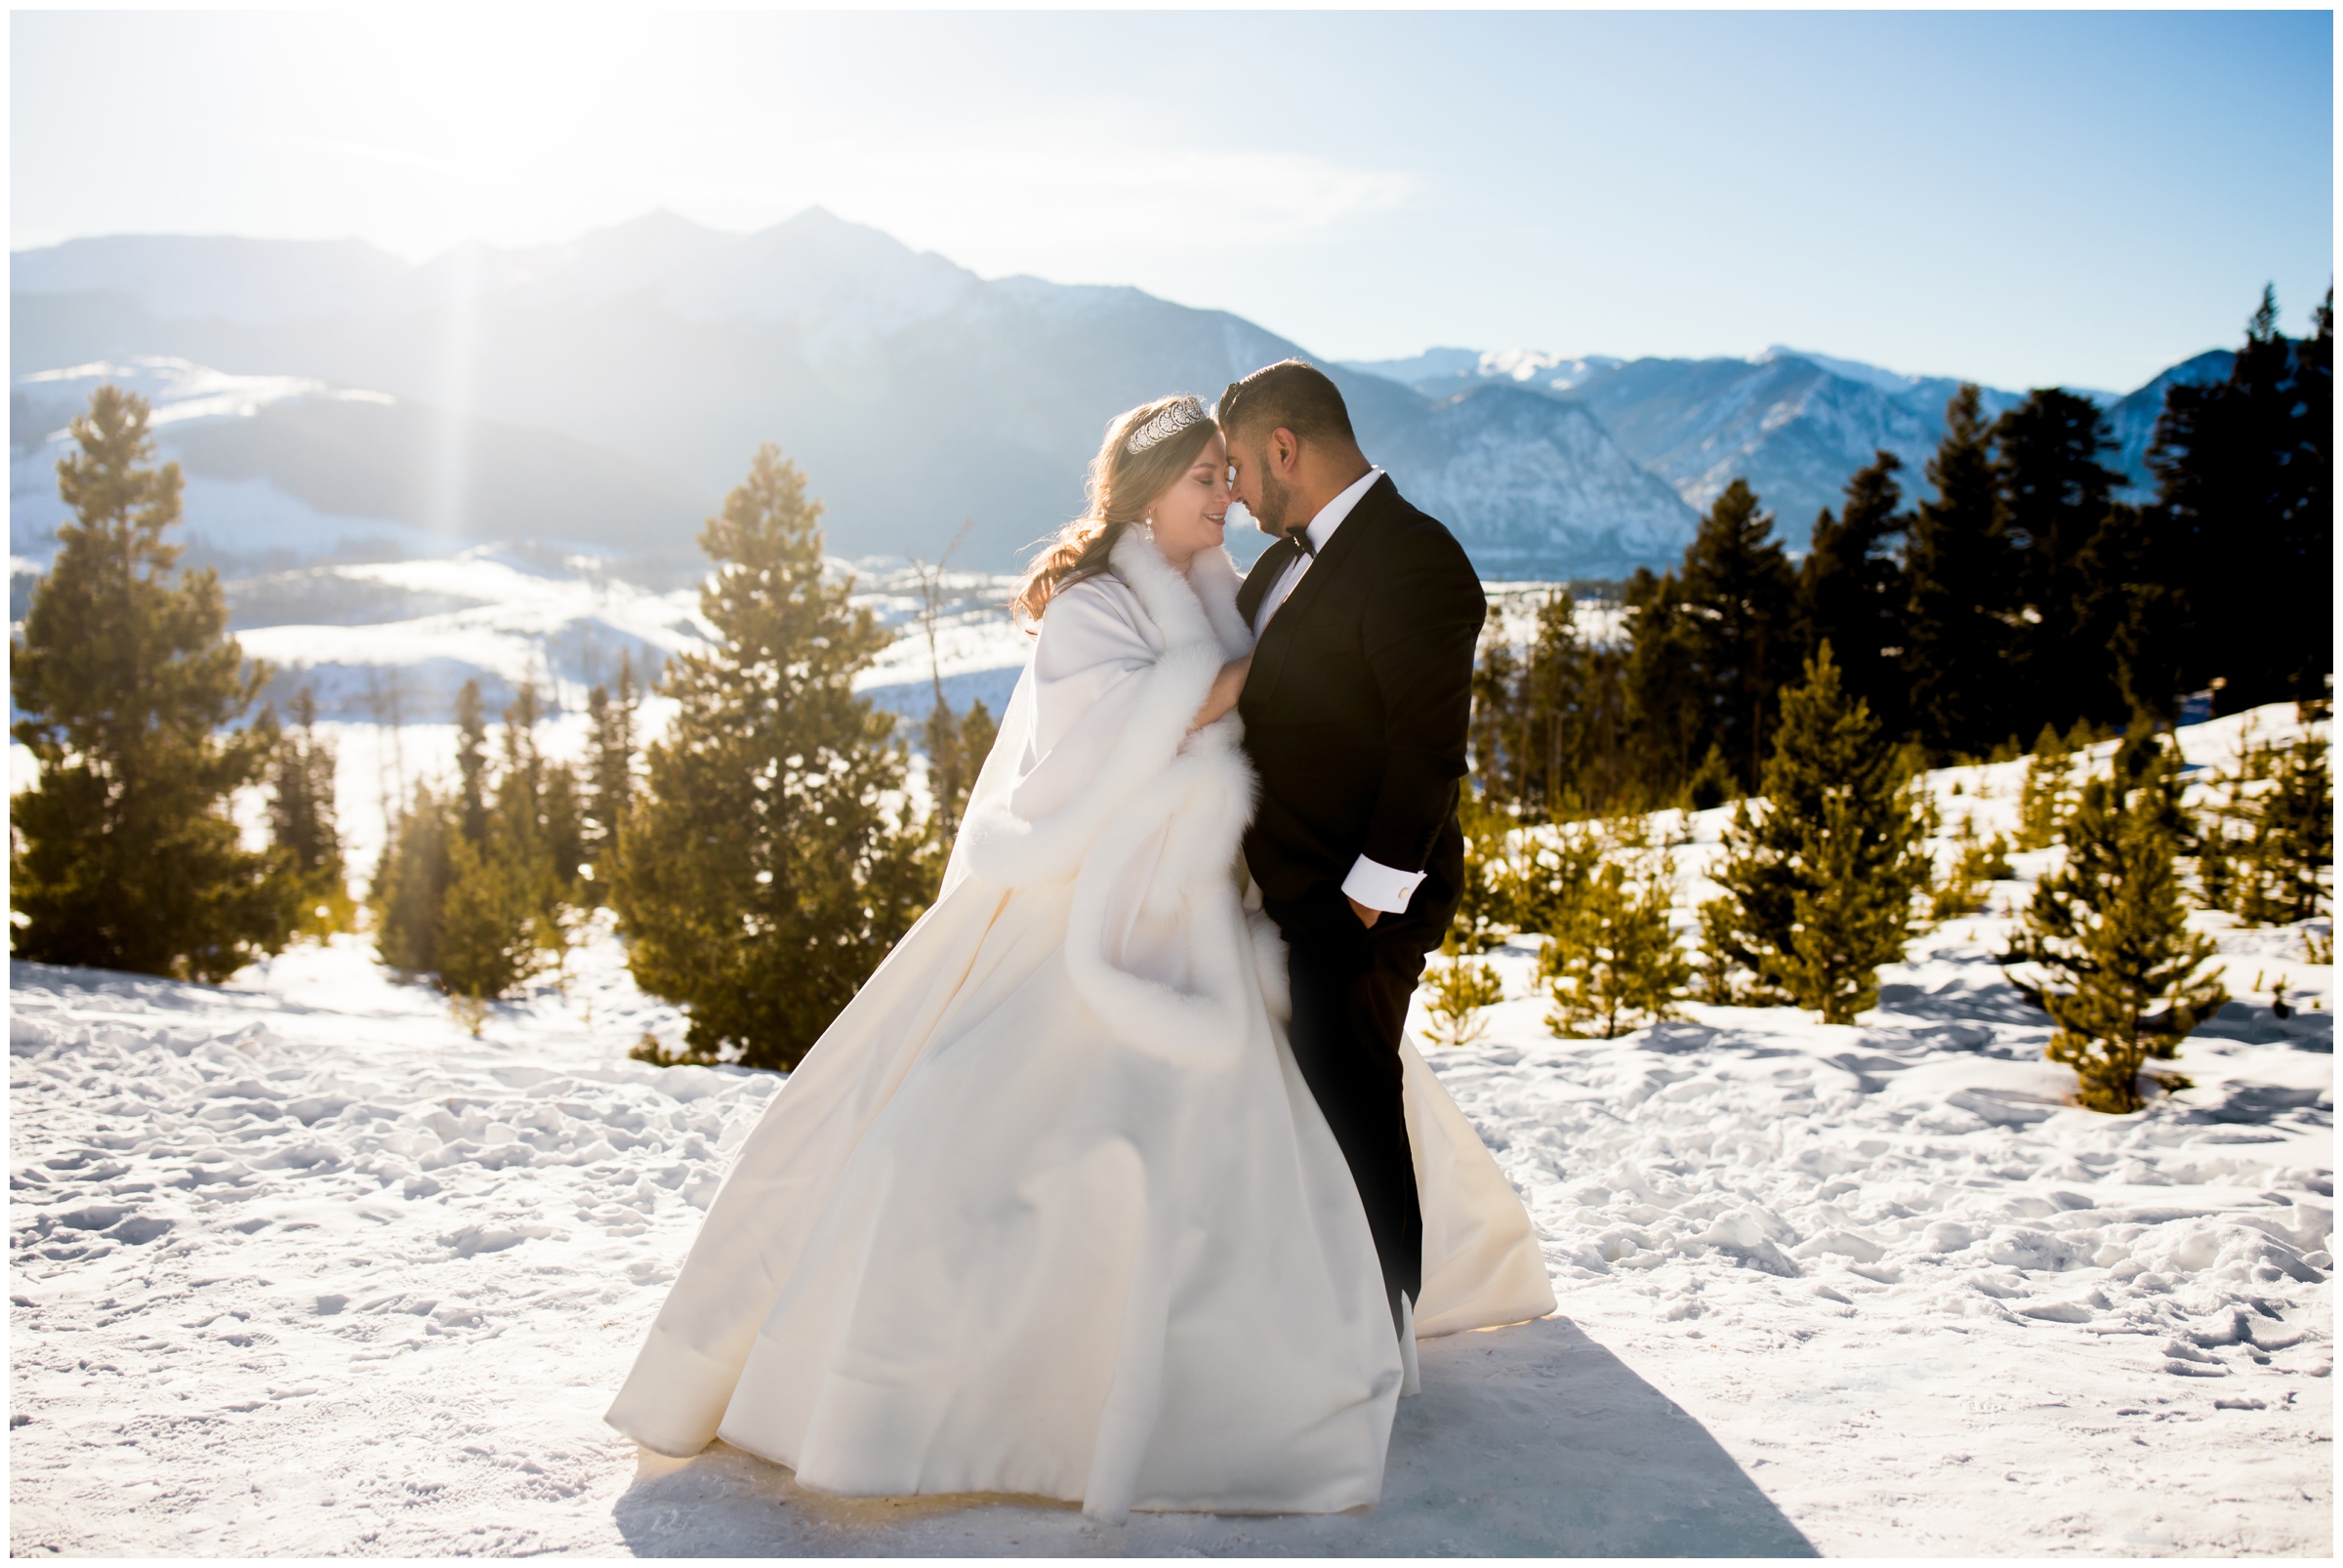 Sapphire Point wedding photos by Breckenridge photographer Plum Pretty Photography. Snowy Colorado winter elopement inspiration.